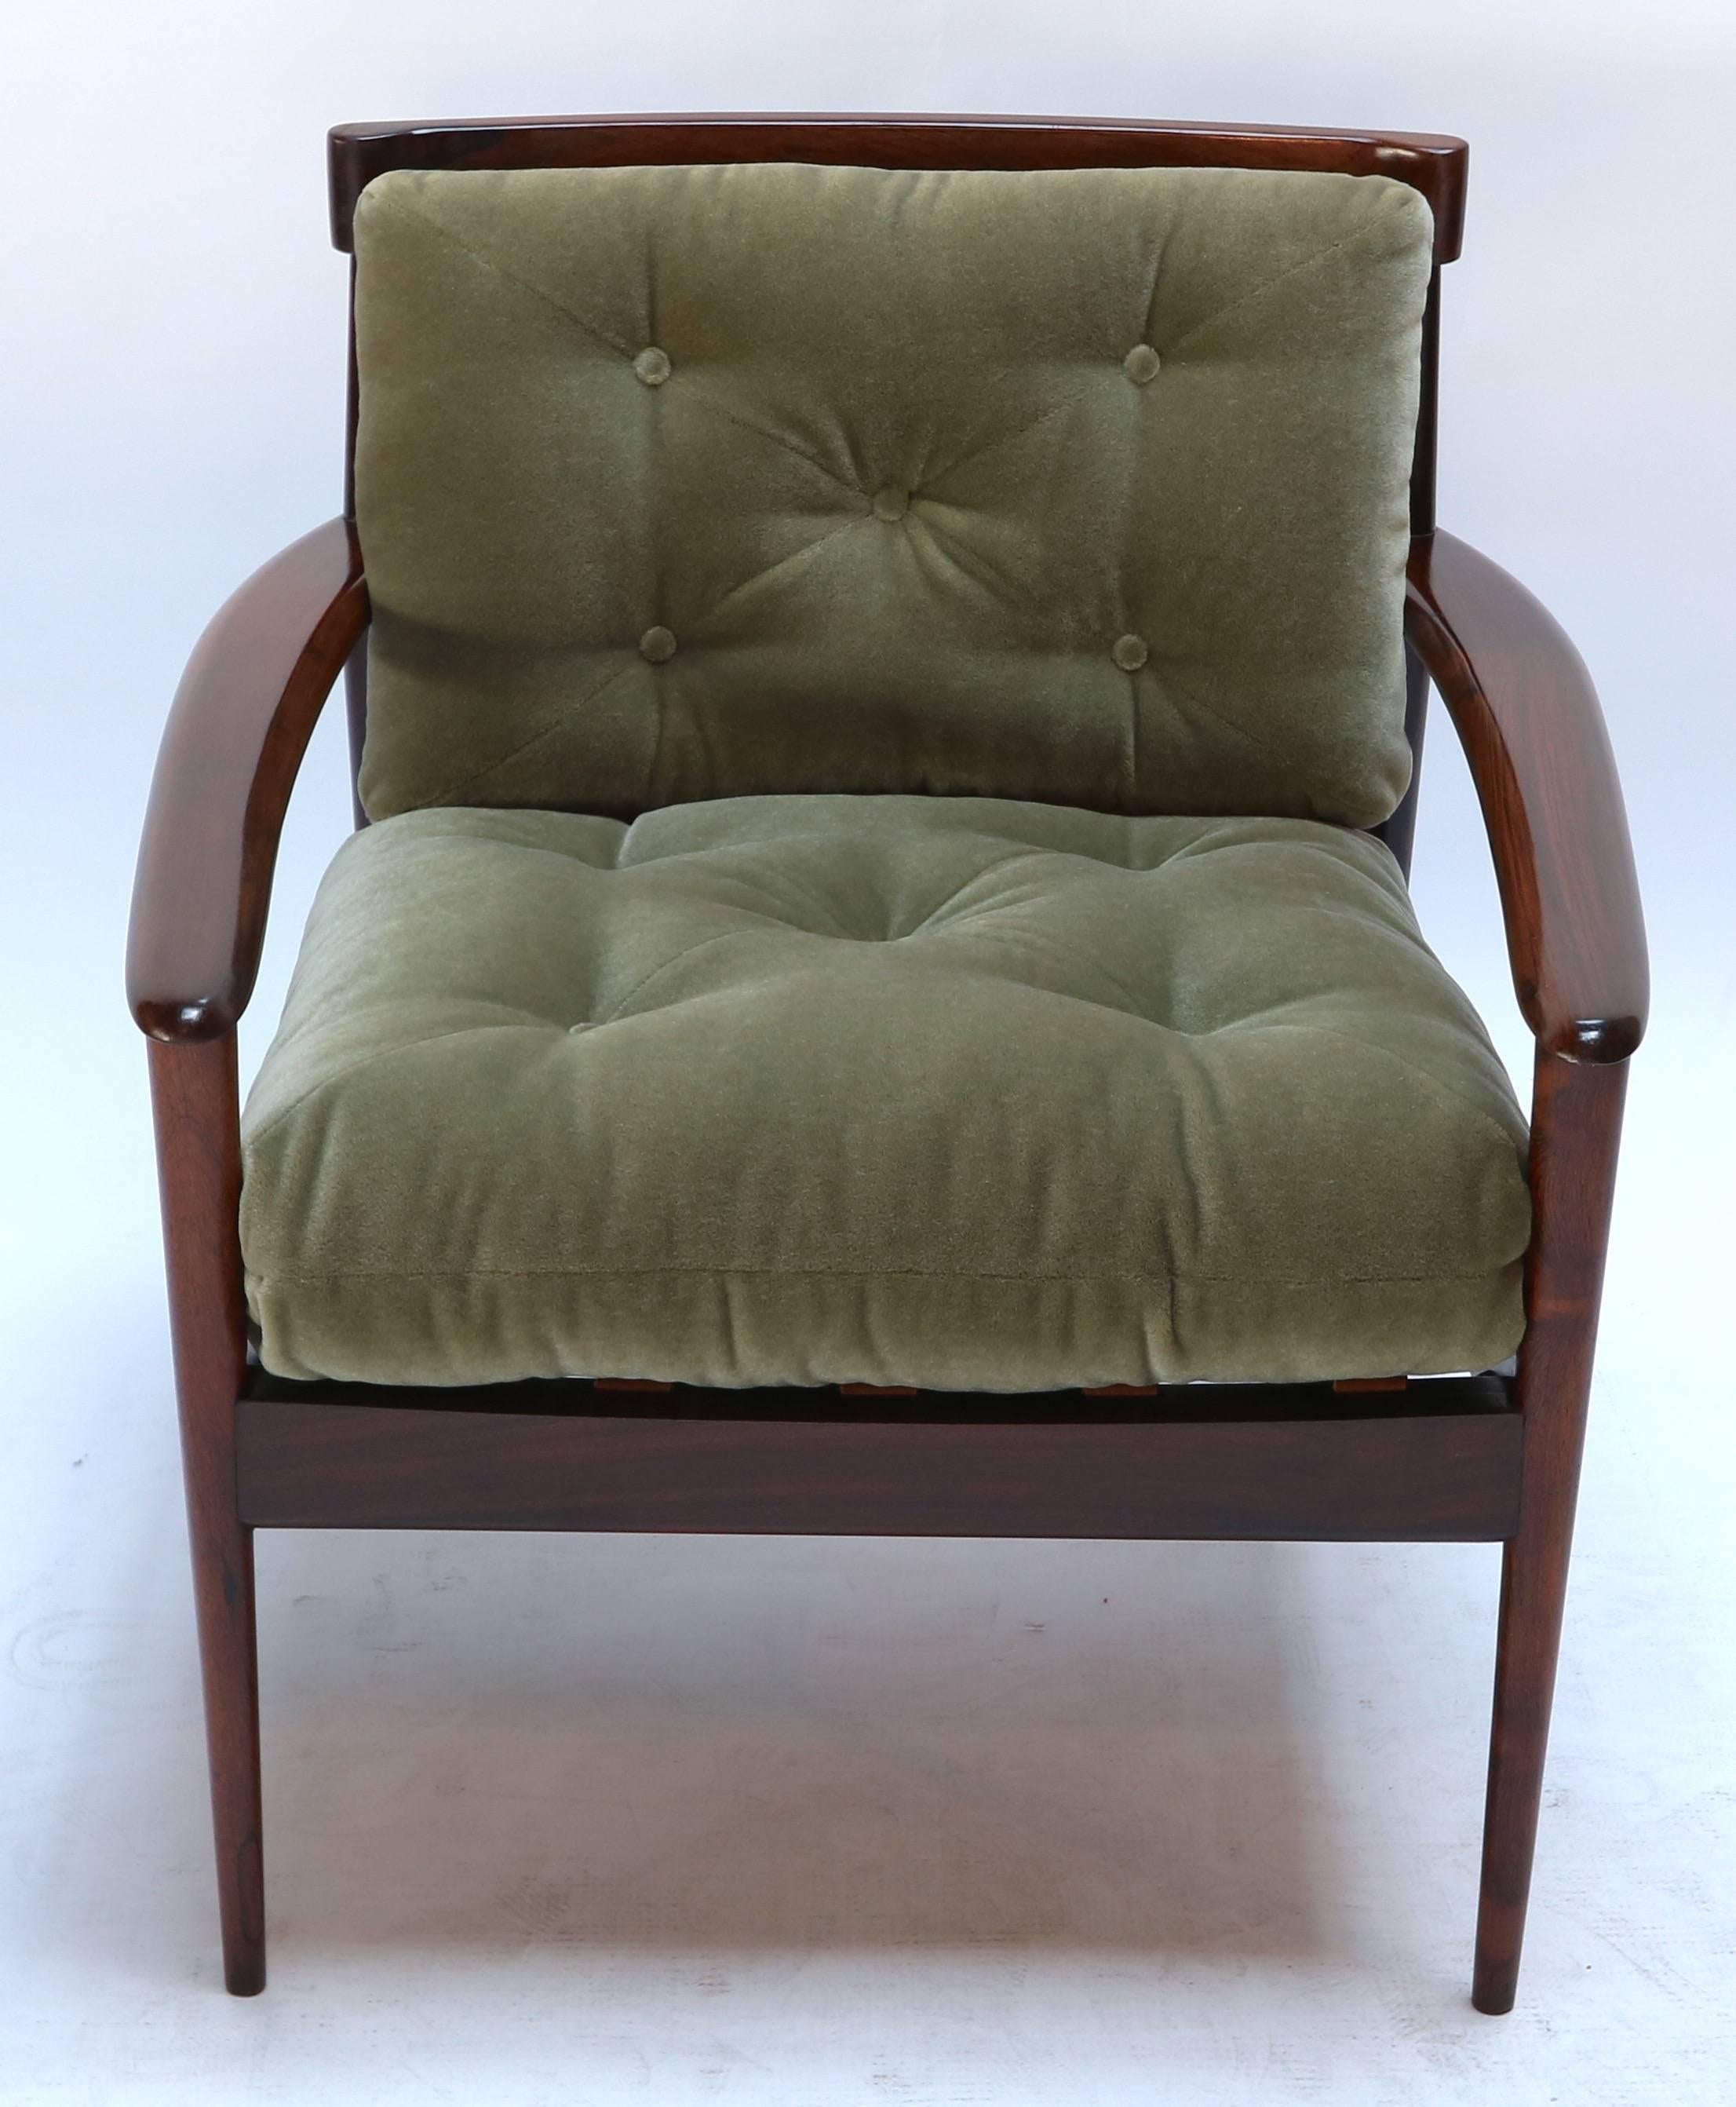 Pair of Rino Levi Brazilian 1960s jacaranda wood armchairs upholstered in green mohair.

